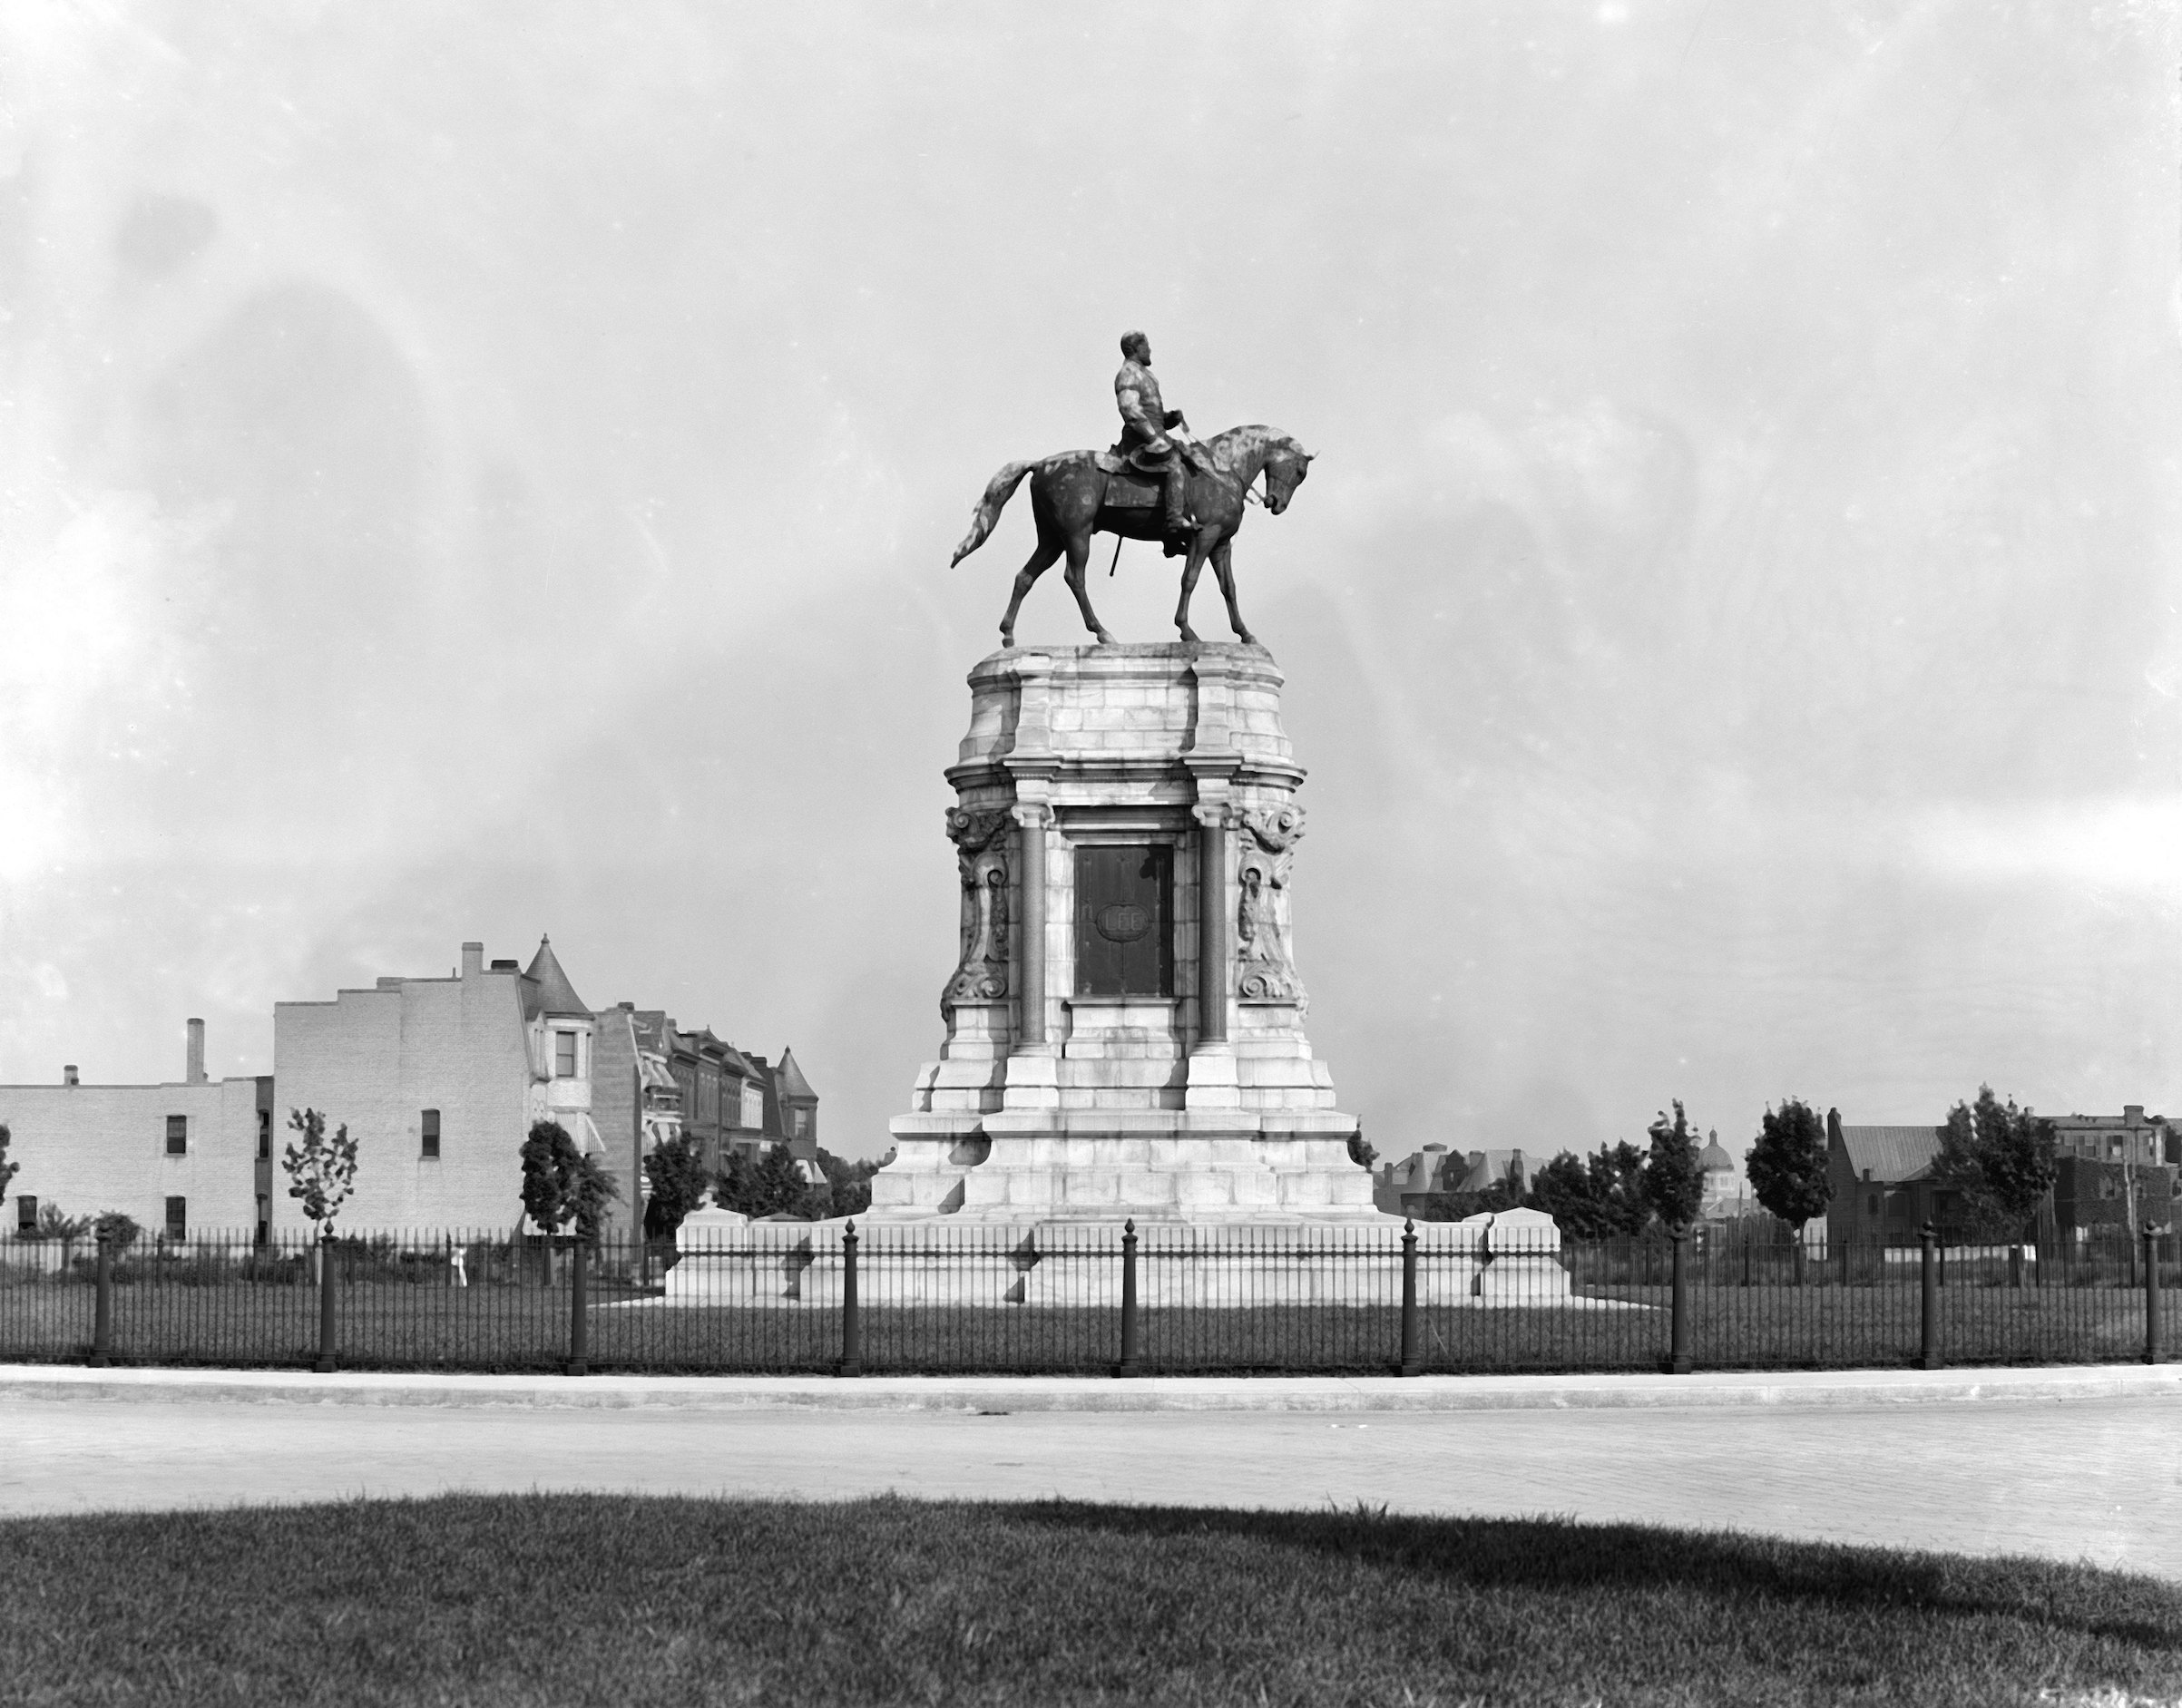 Equestrian Statue of Robert E. Lee in Richmond, Virginia